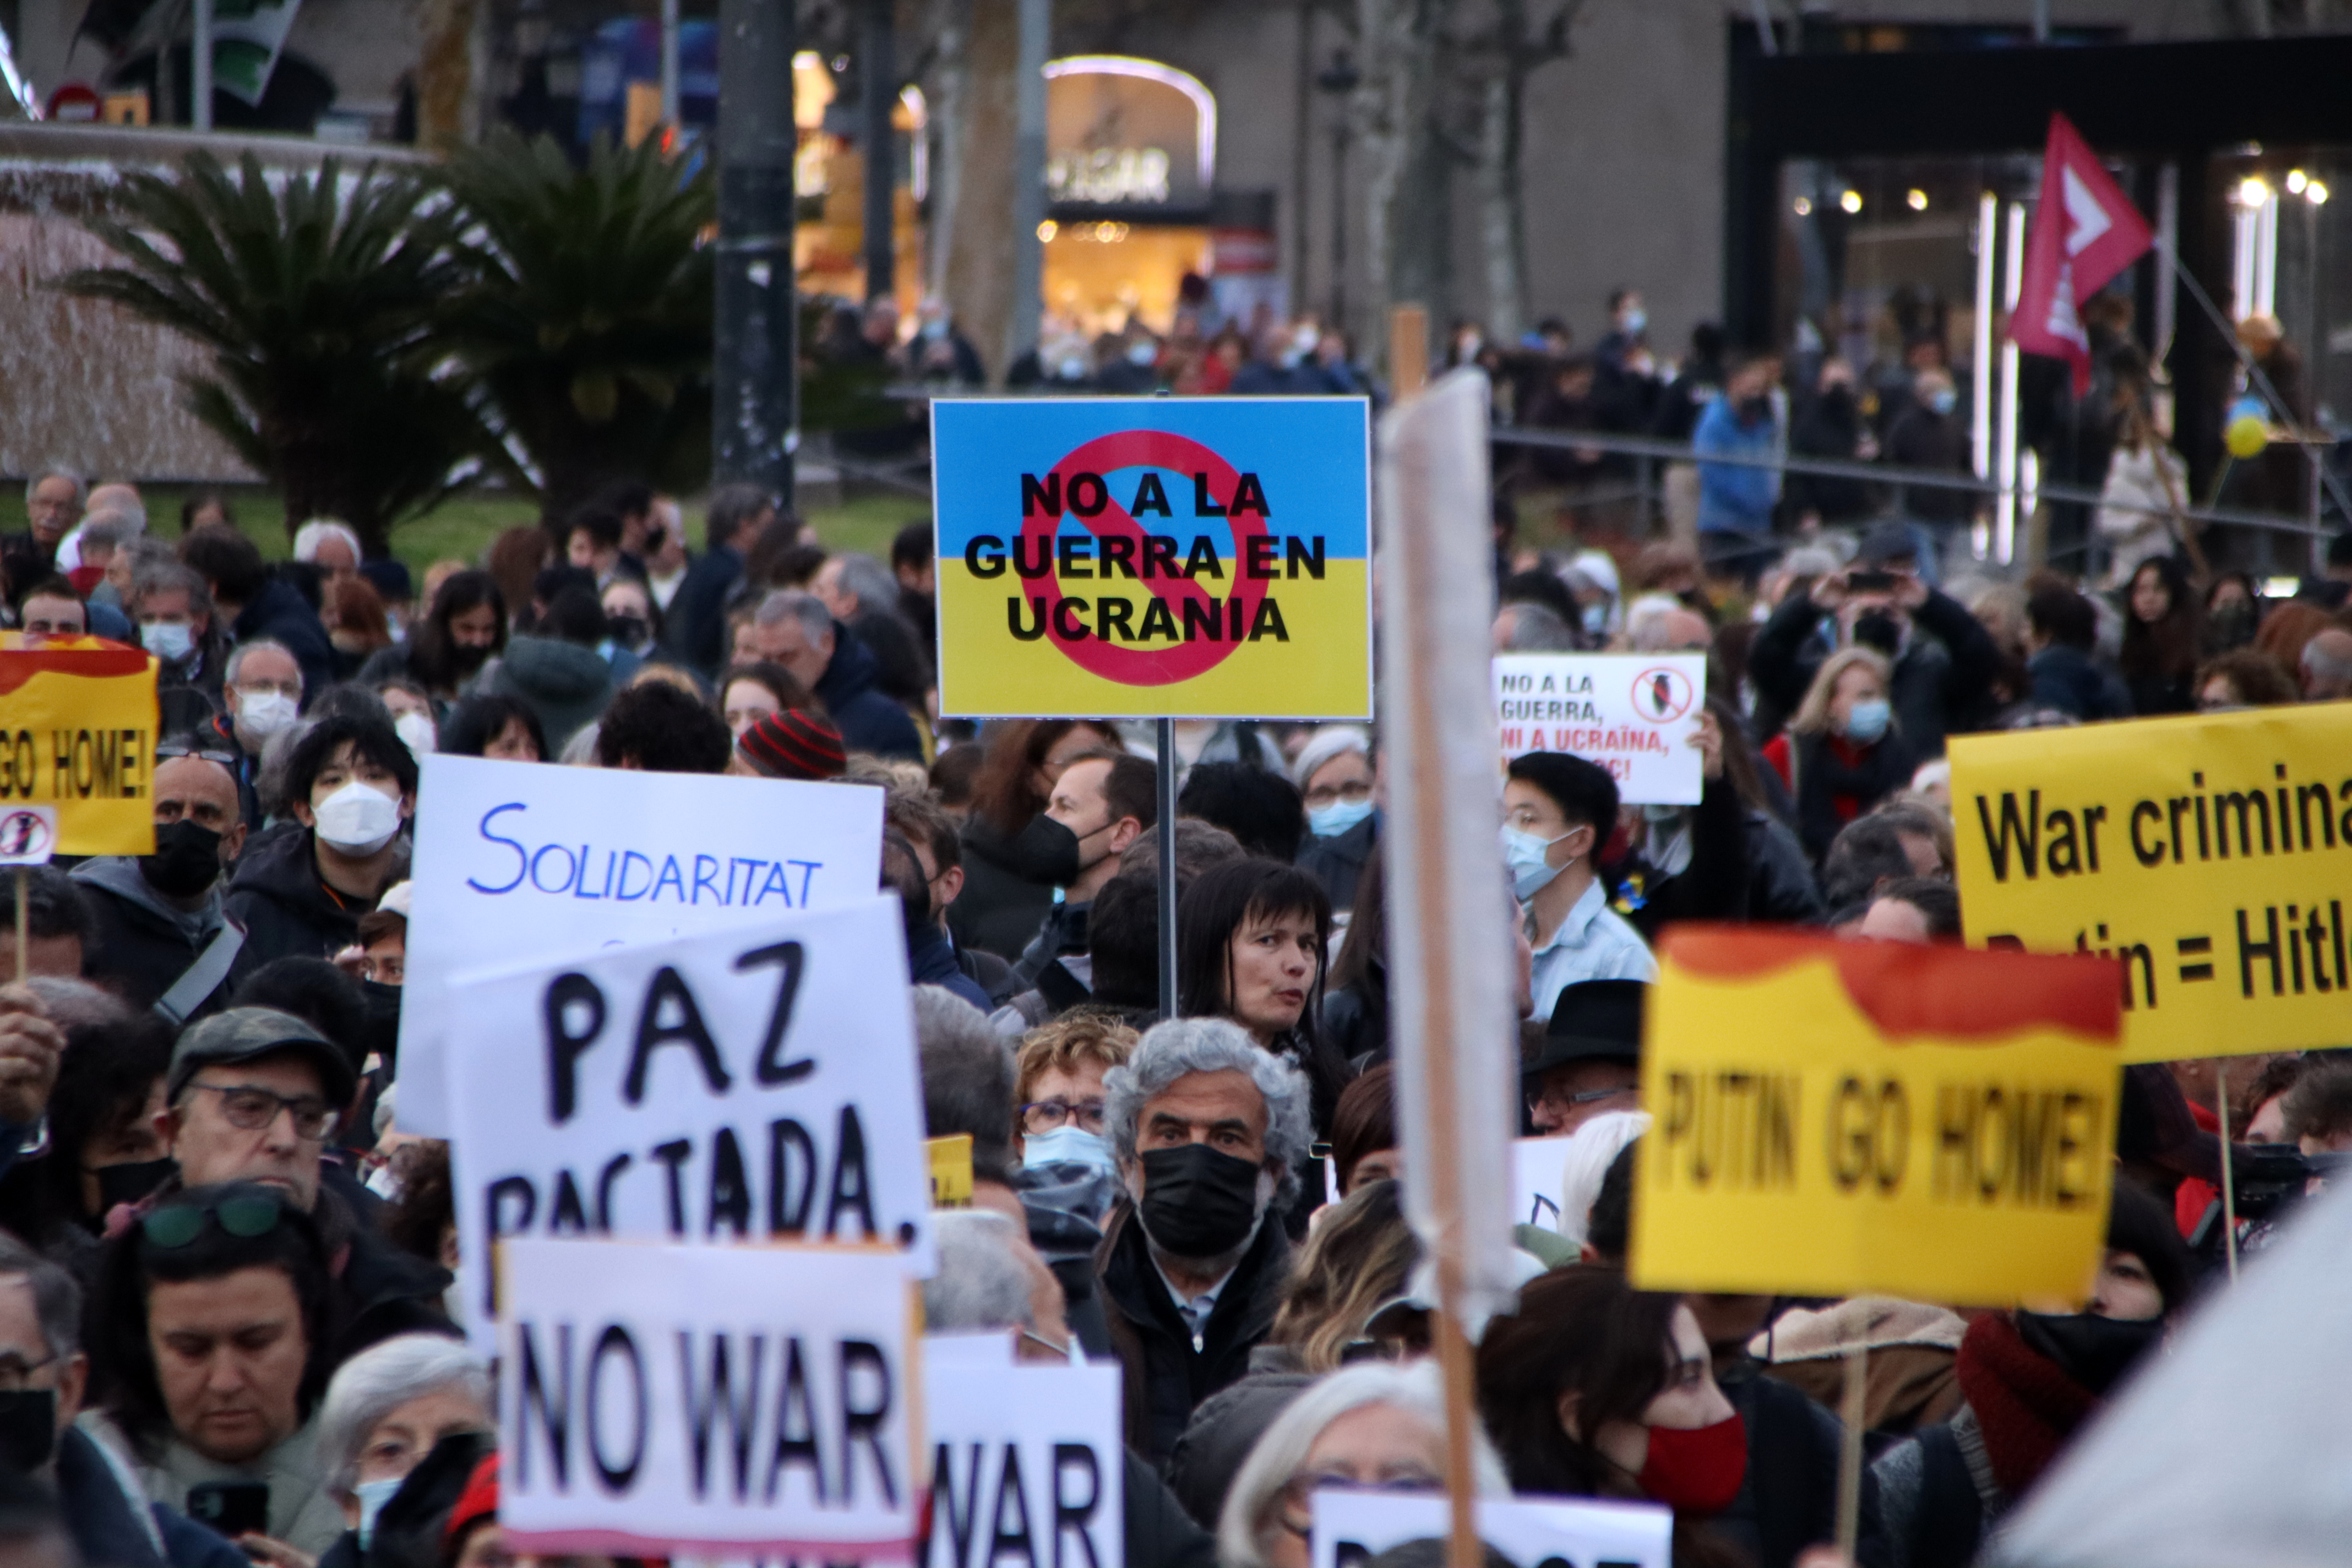 Protest for peace in Ukraine in Barcelona